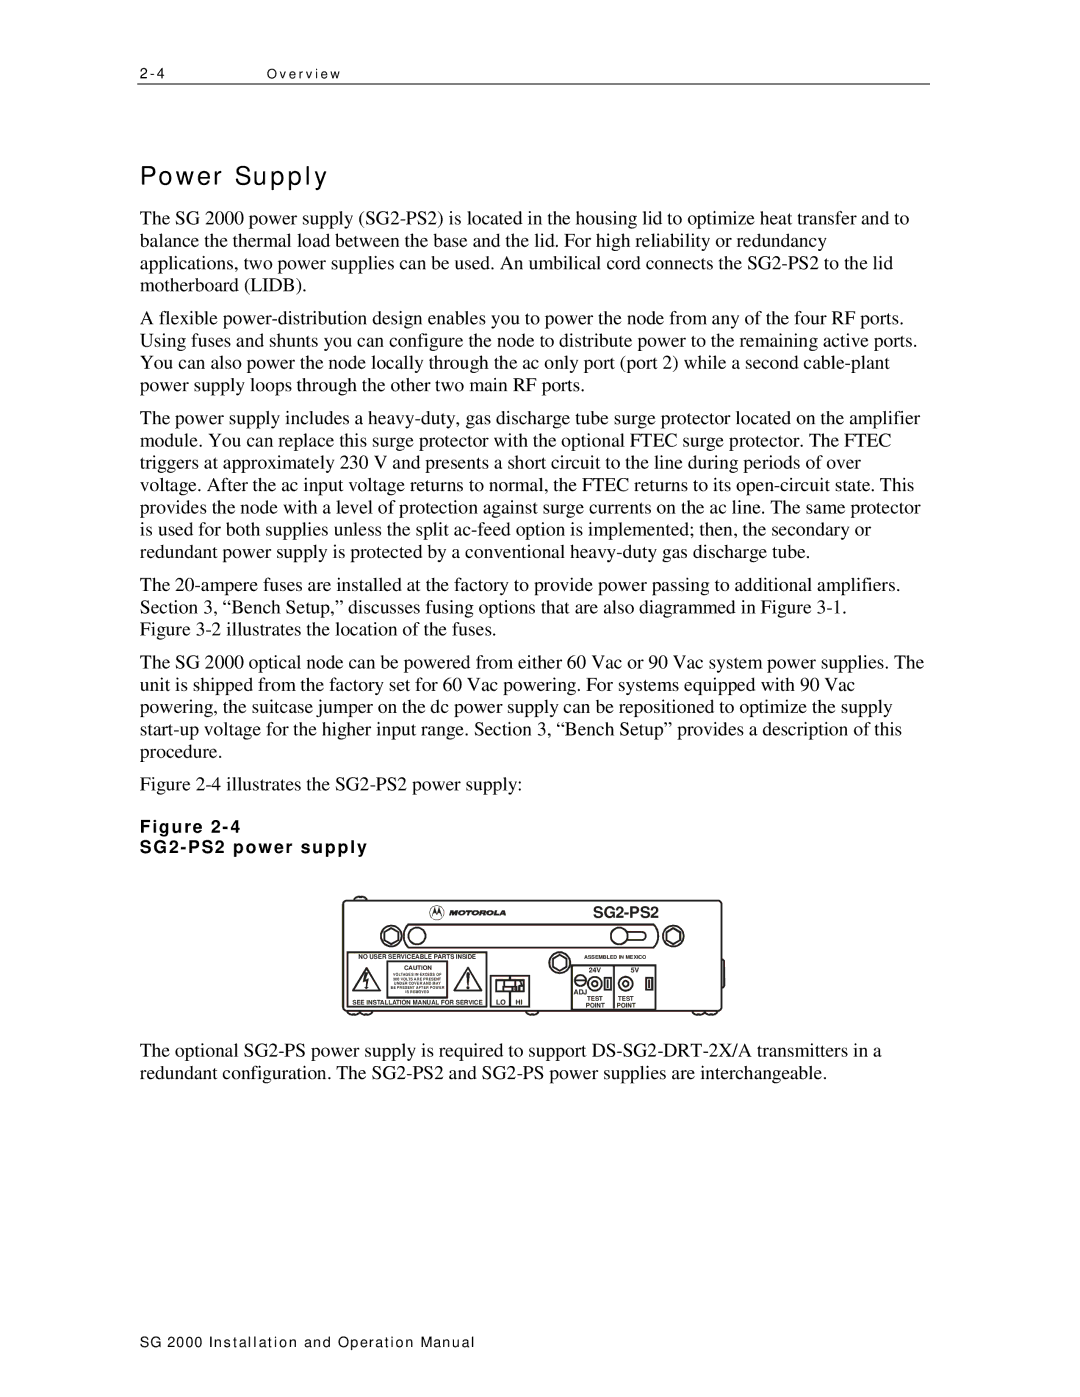 Motorola SG 2000 operation manual Power Supply, SG2-PS2 power supply 